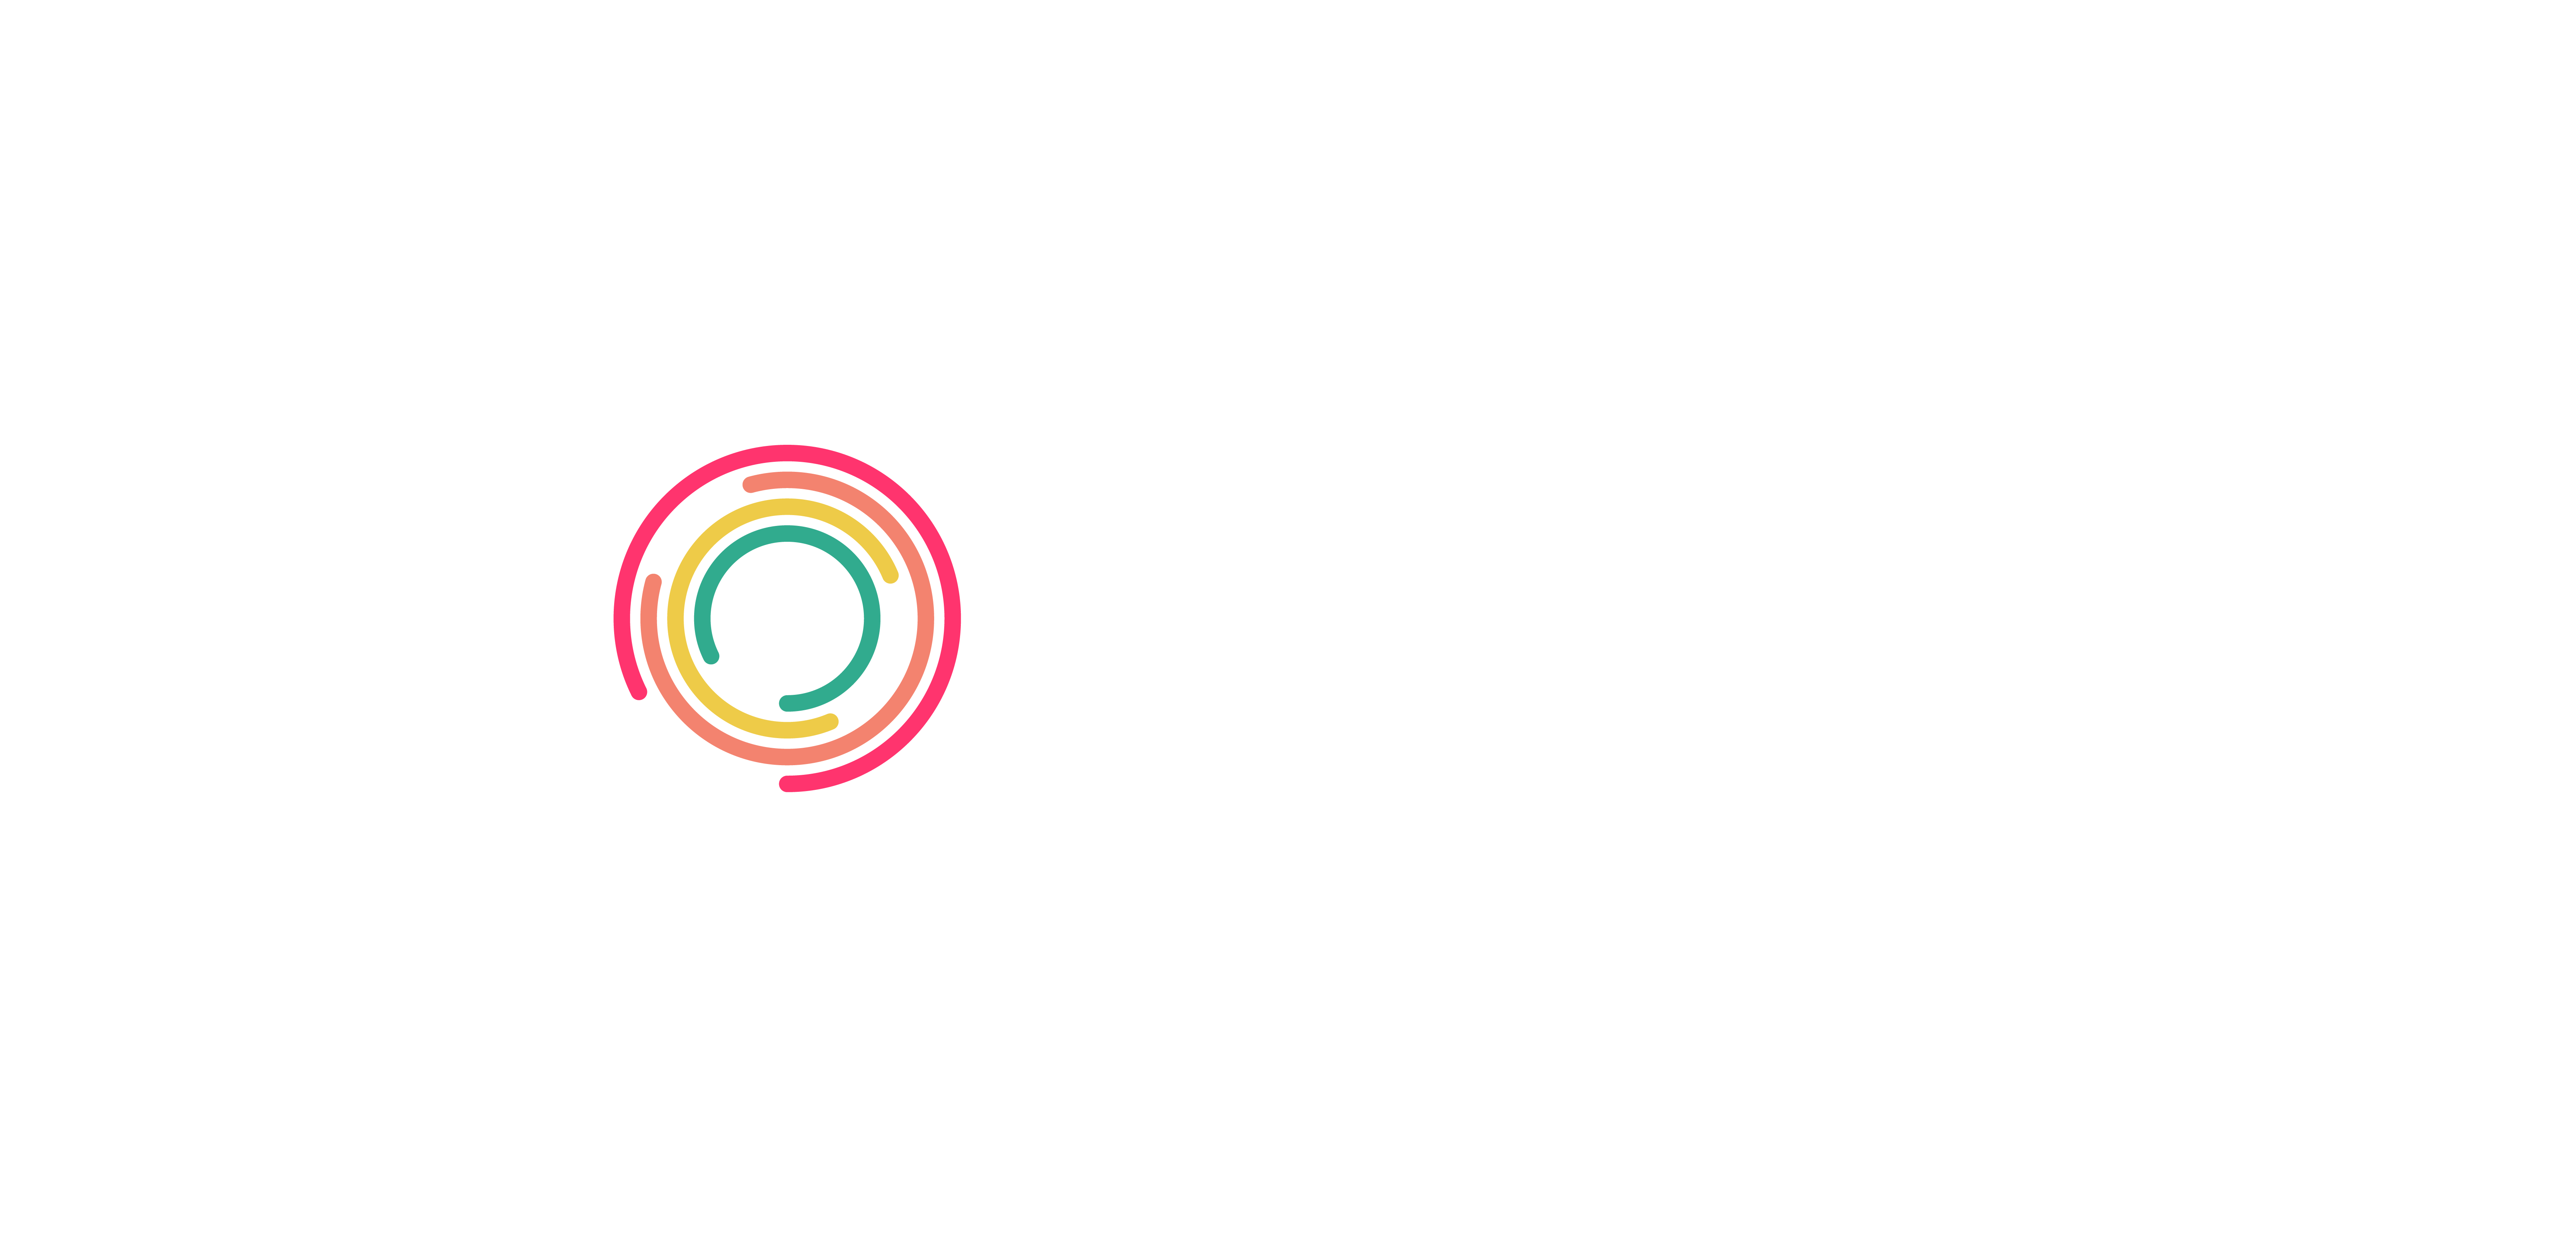 EO_Johannesburg_RGB_inverse